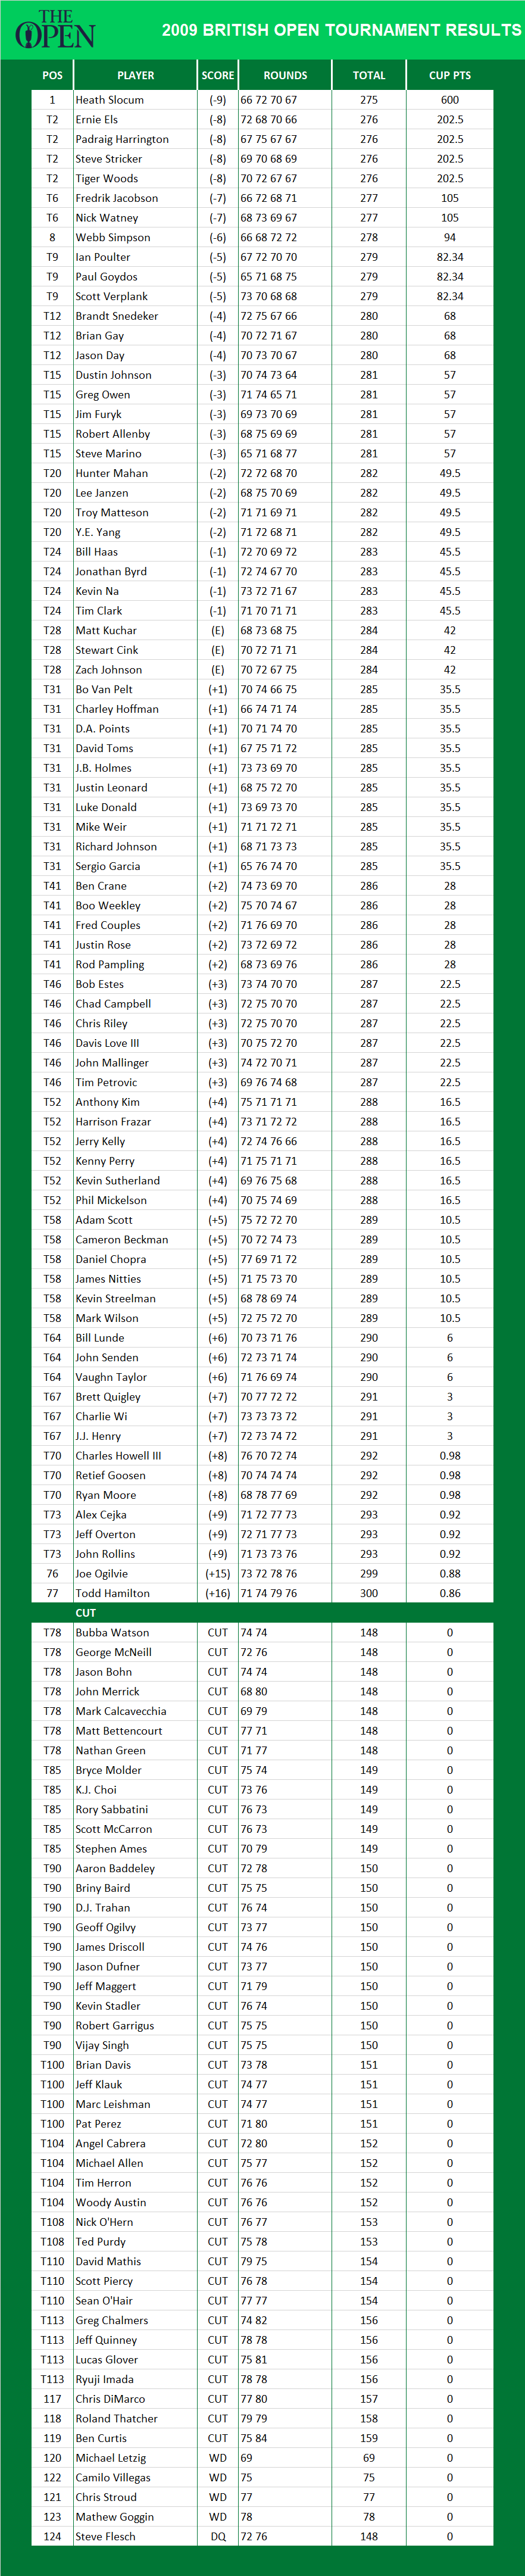 2009 British Open Championship PGA Results